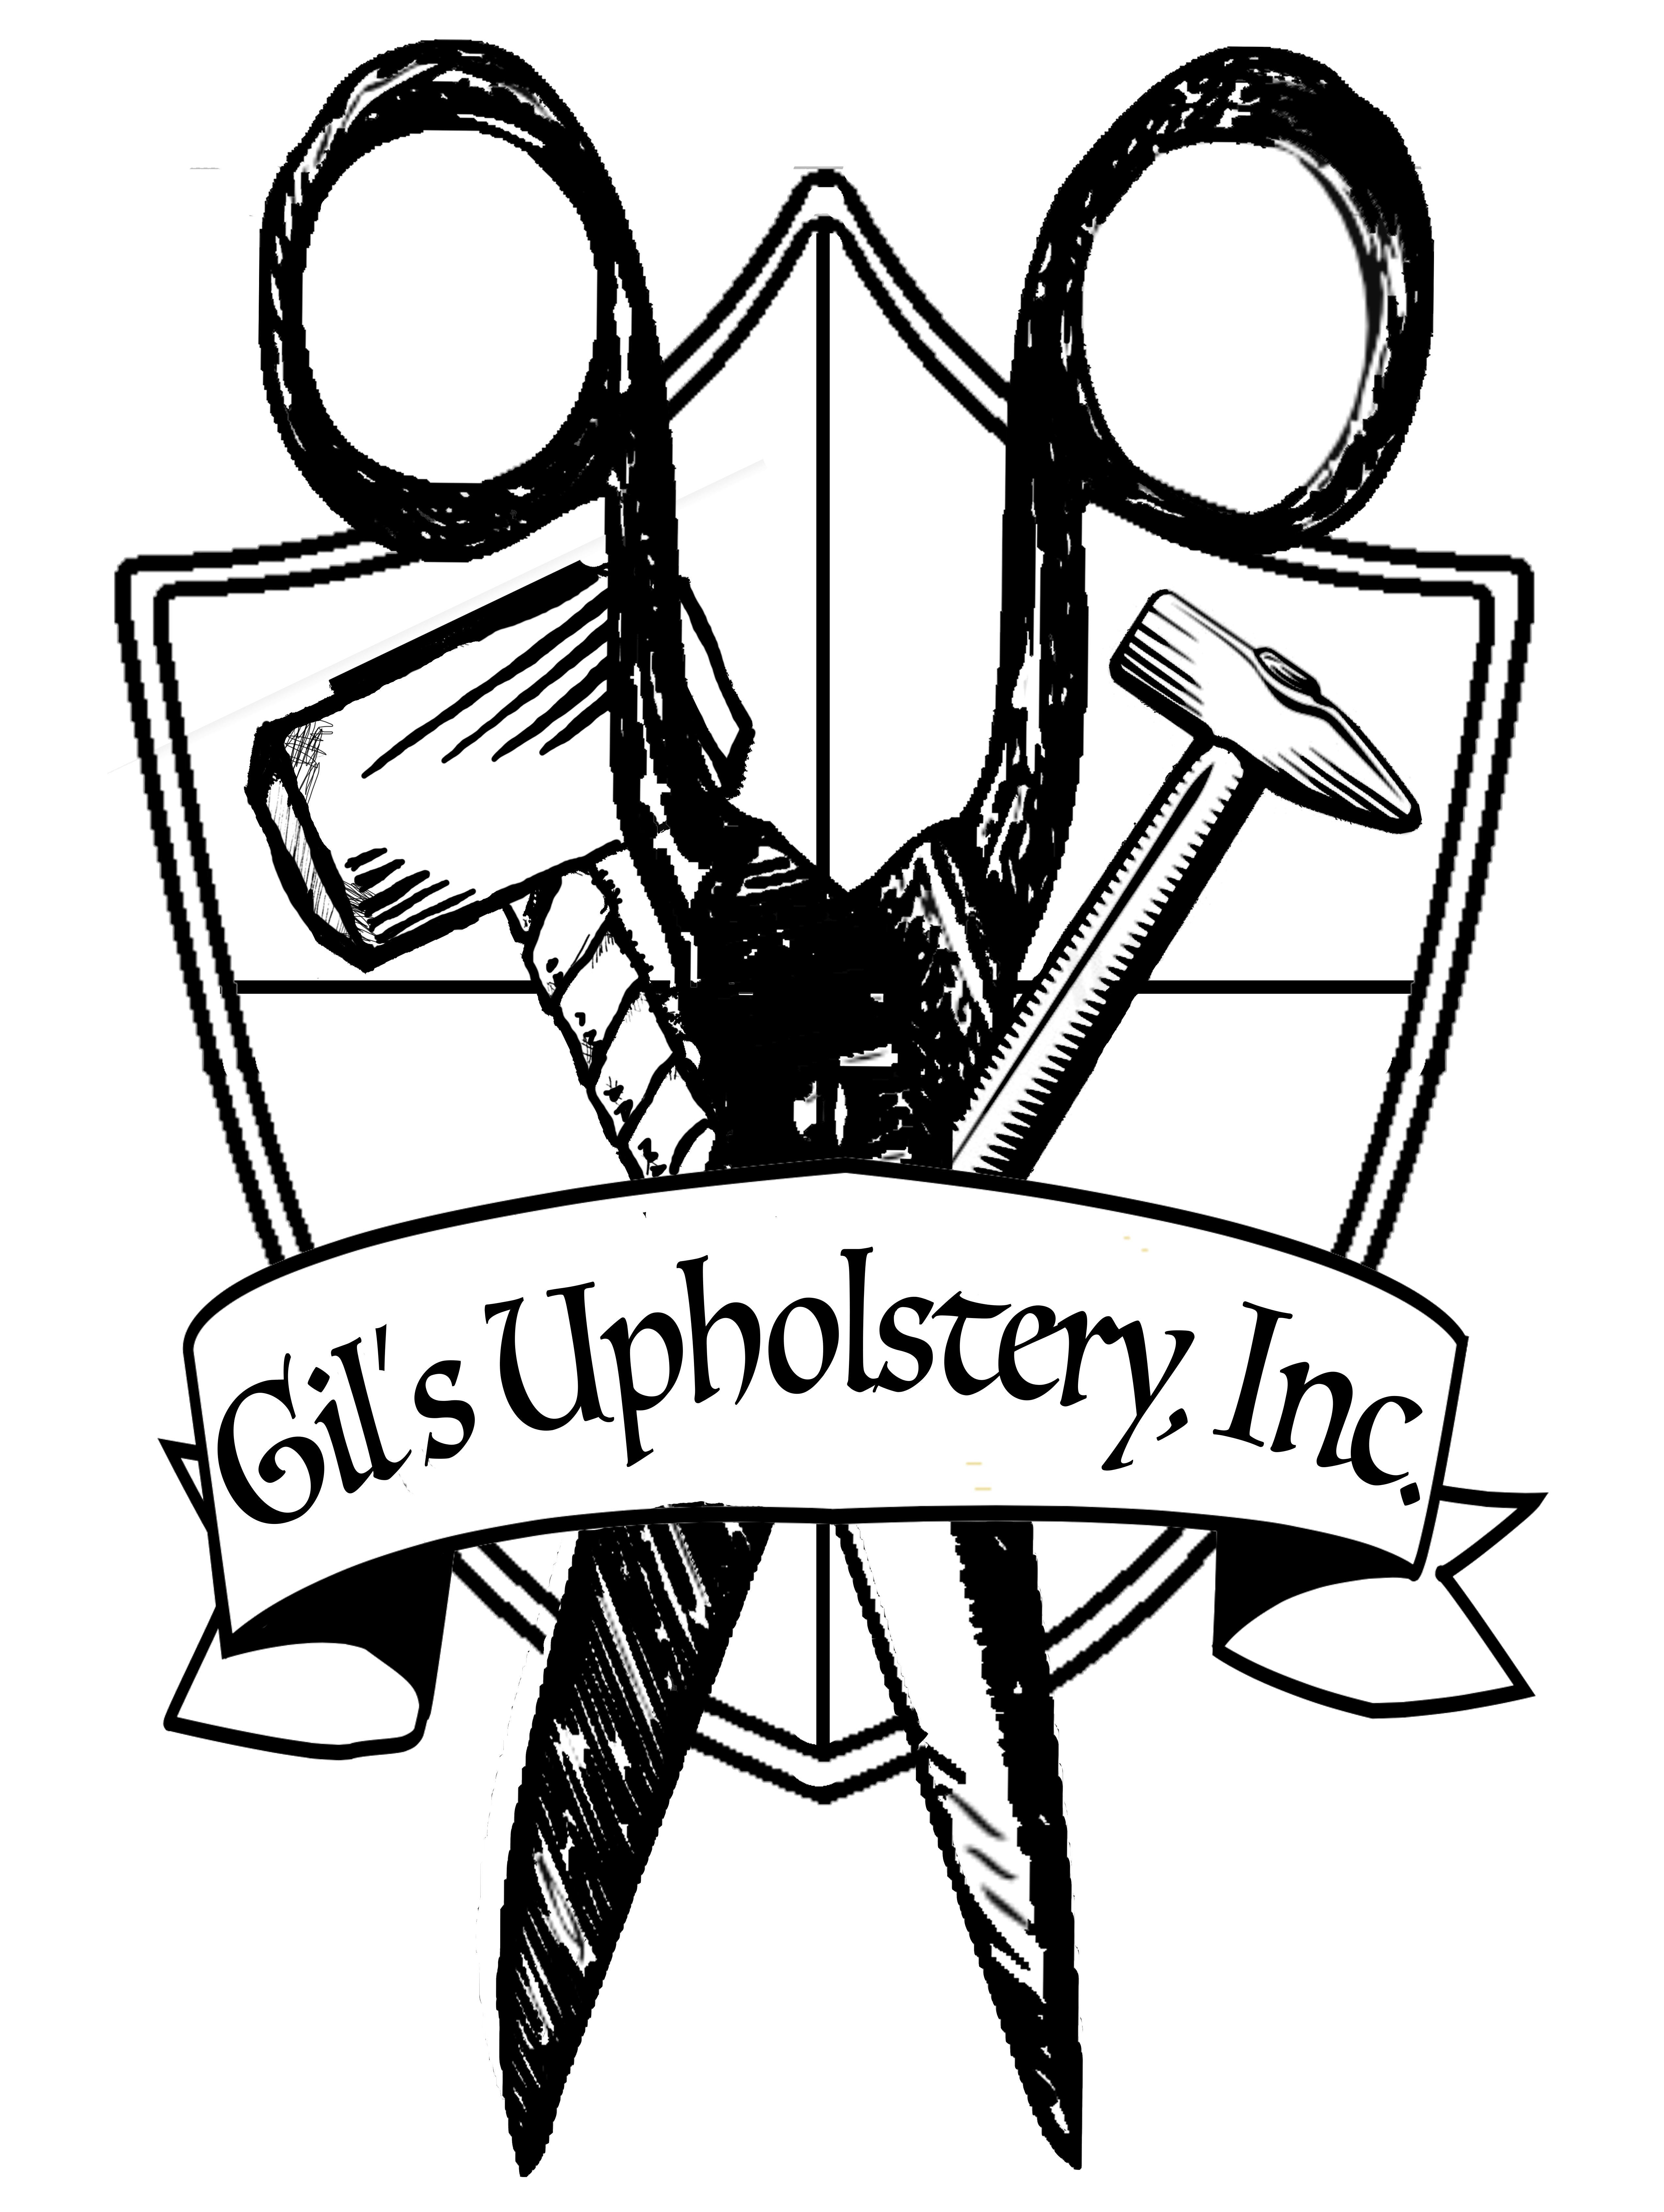 Upholstery Logo - Home - Gil's Upholstery, Inc.